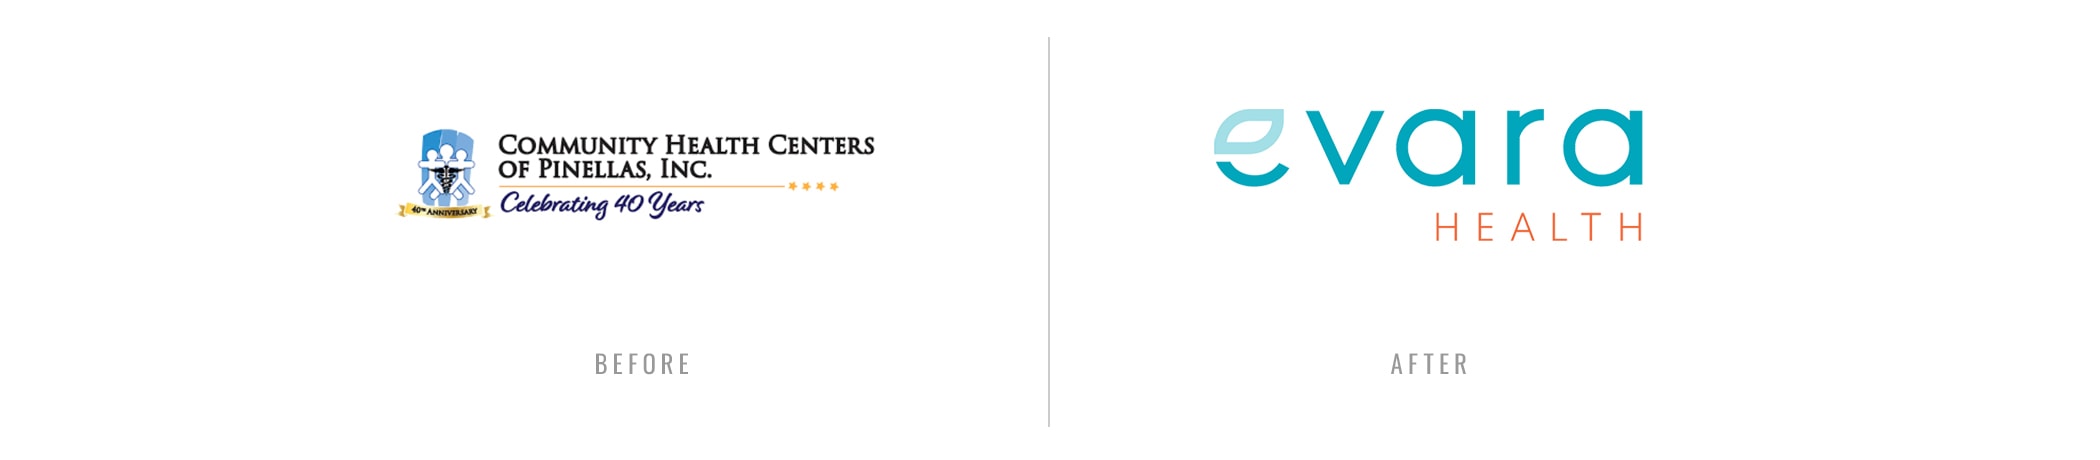 Evara Health Logo - Before and After